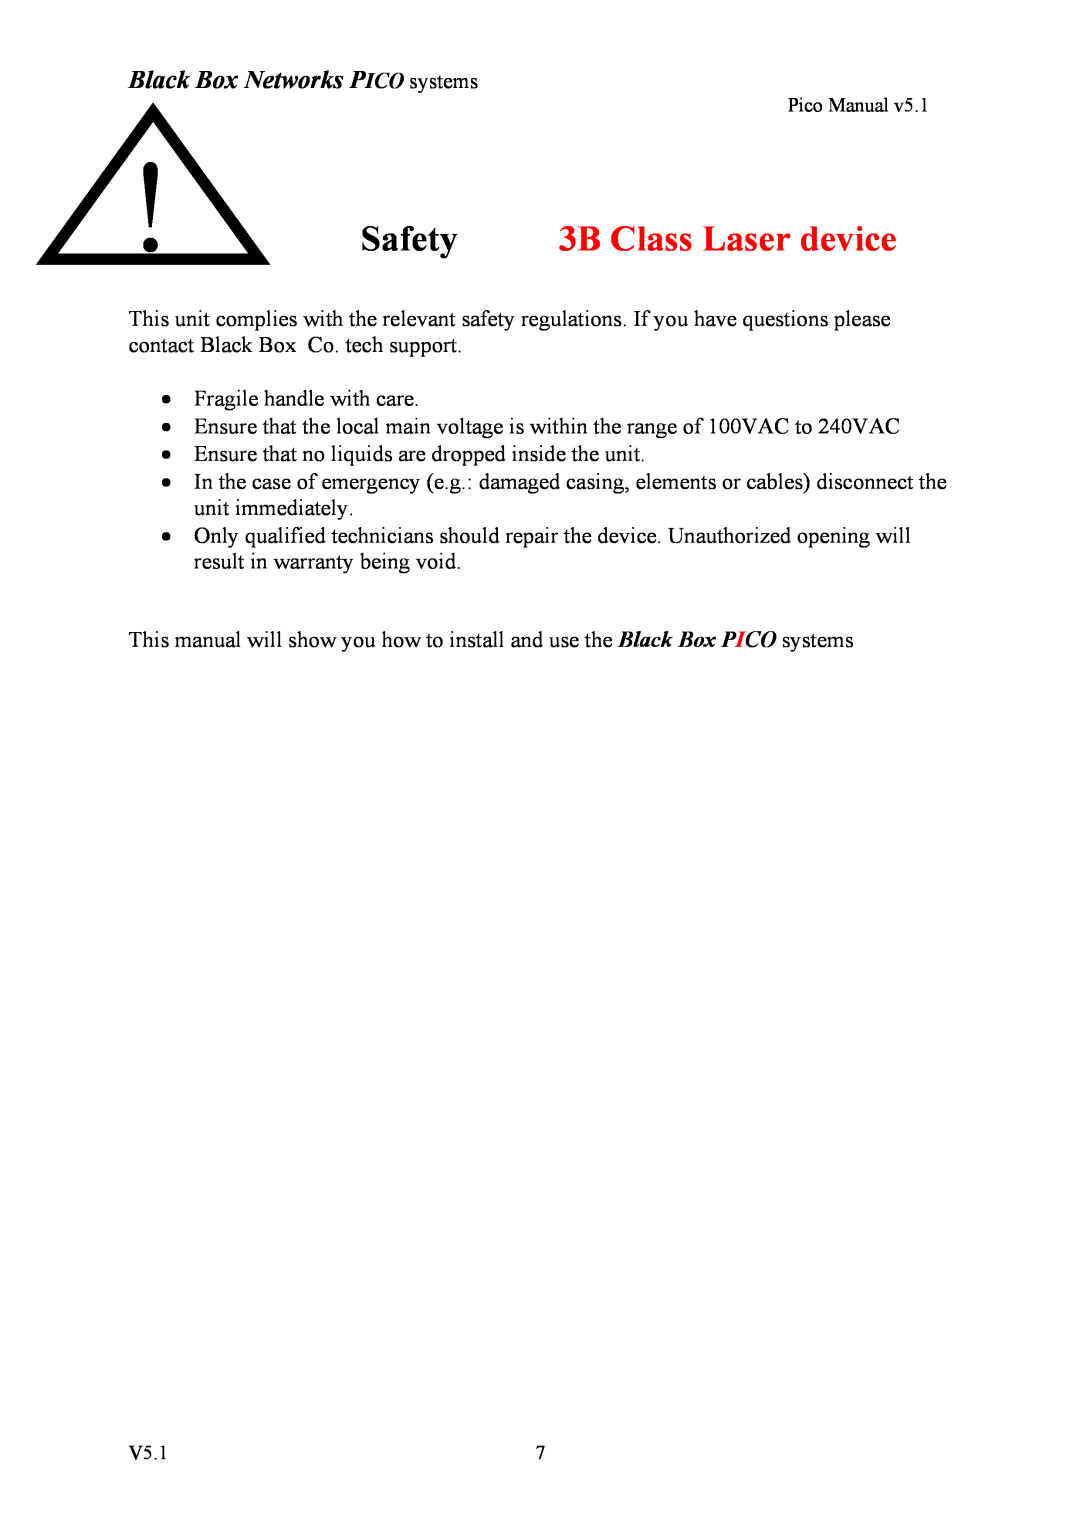 Black Box V5.1 user manual Safety, 3B Class Laser device, Black Box Networks PICO systems 